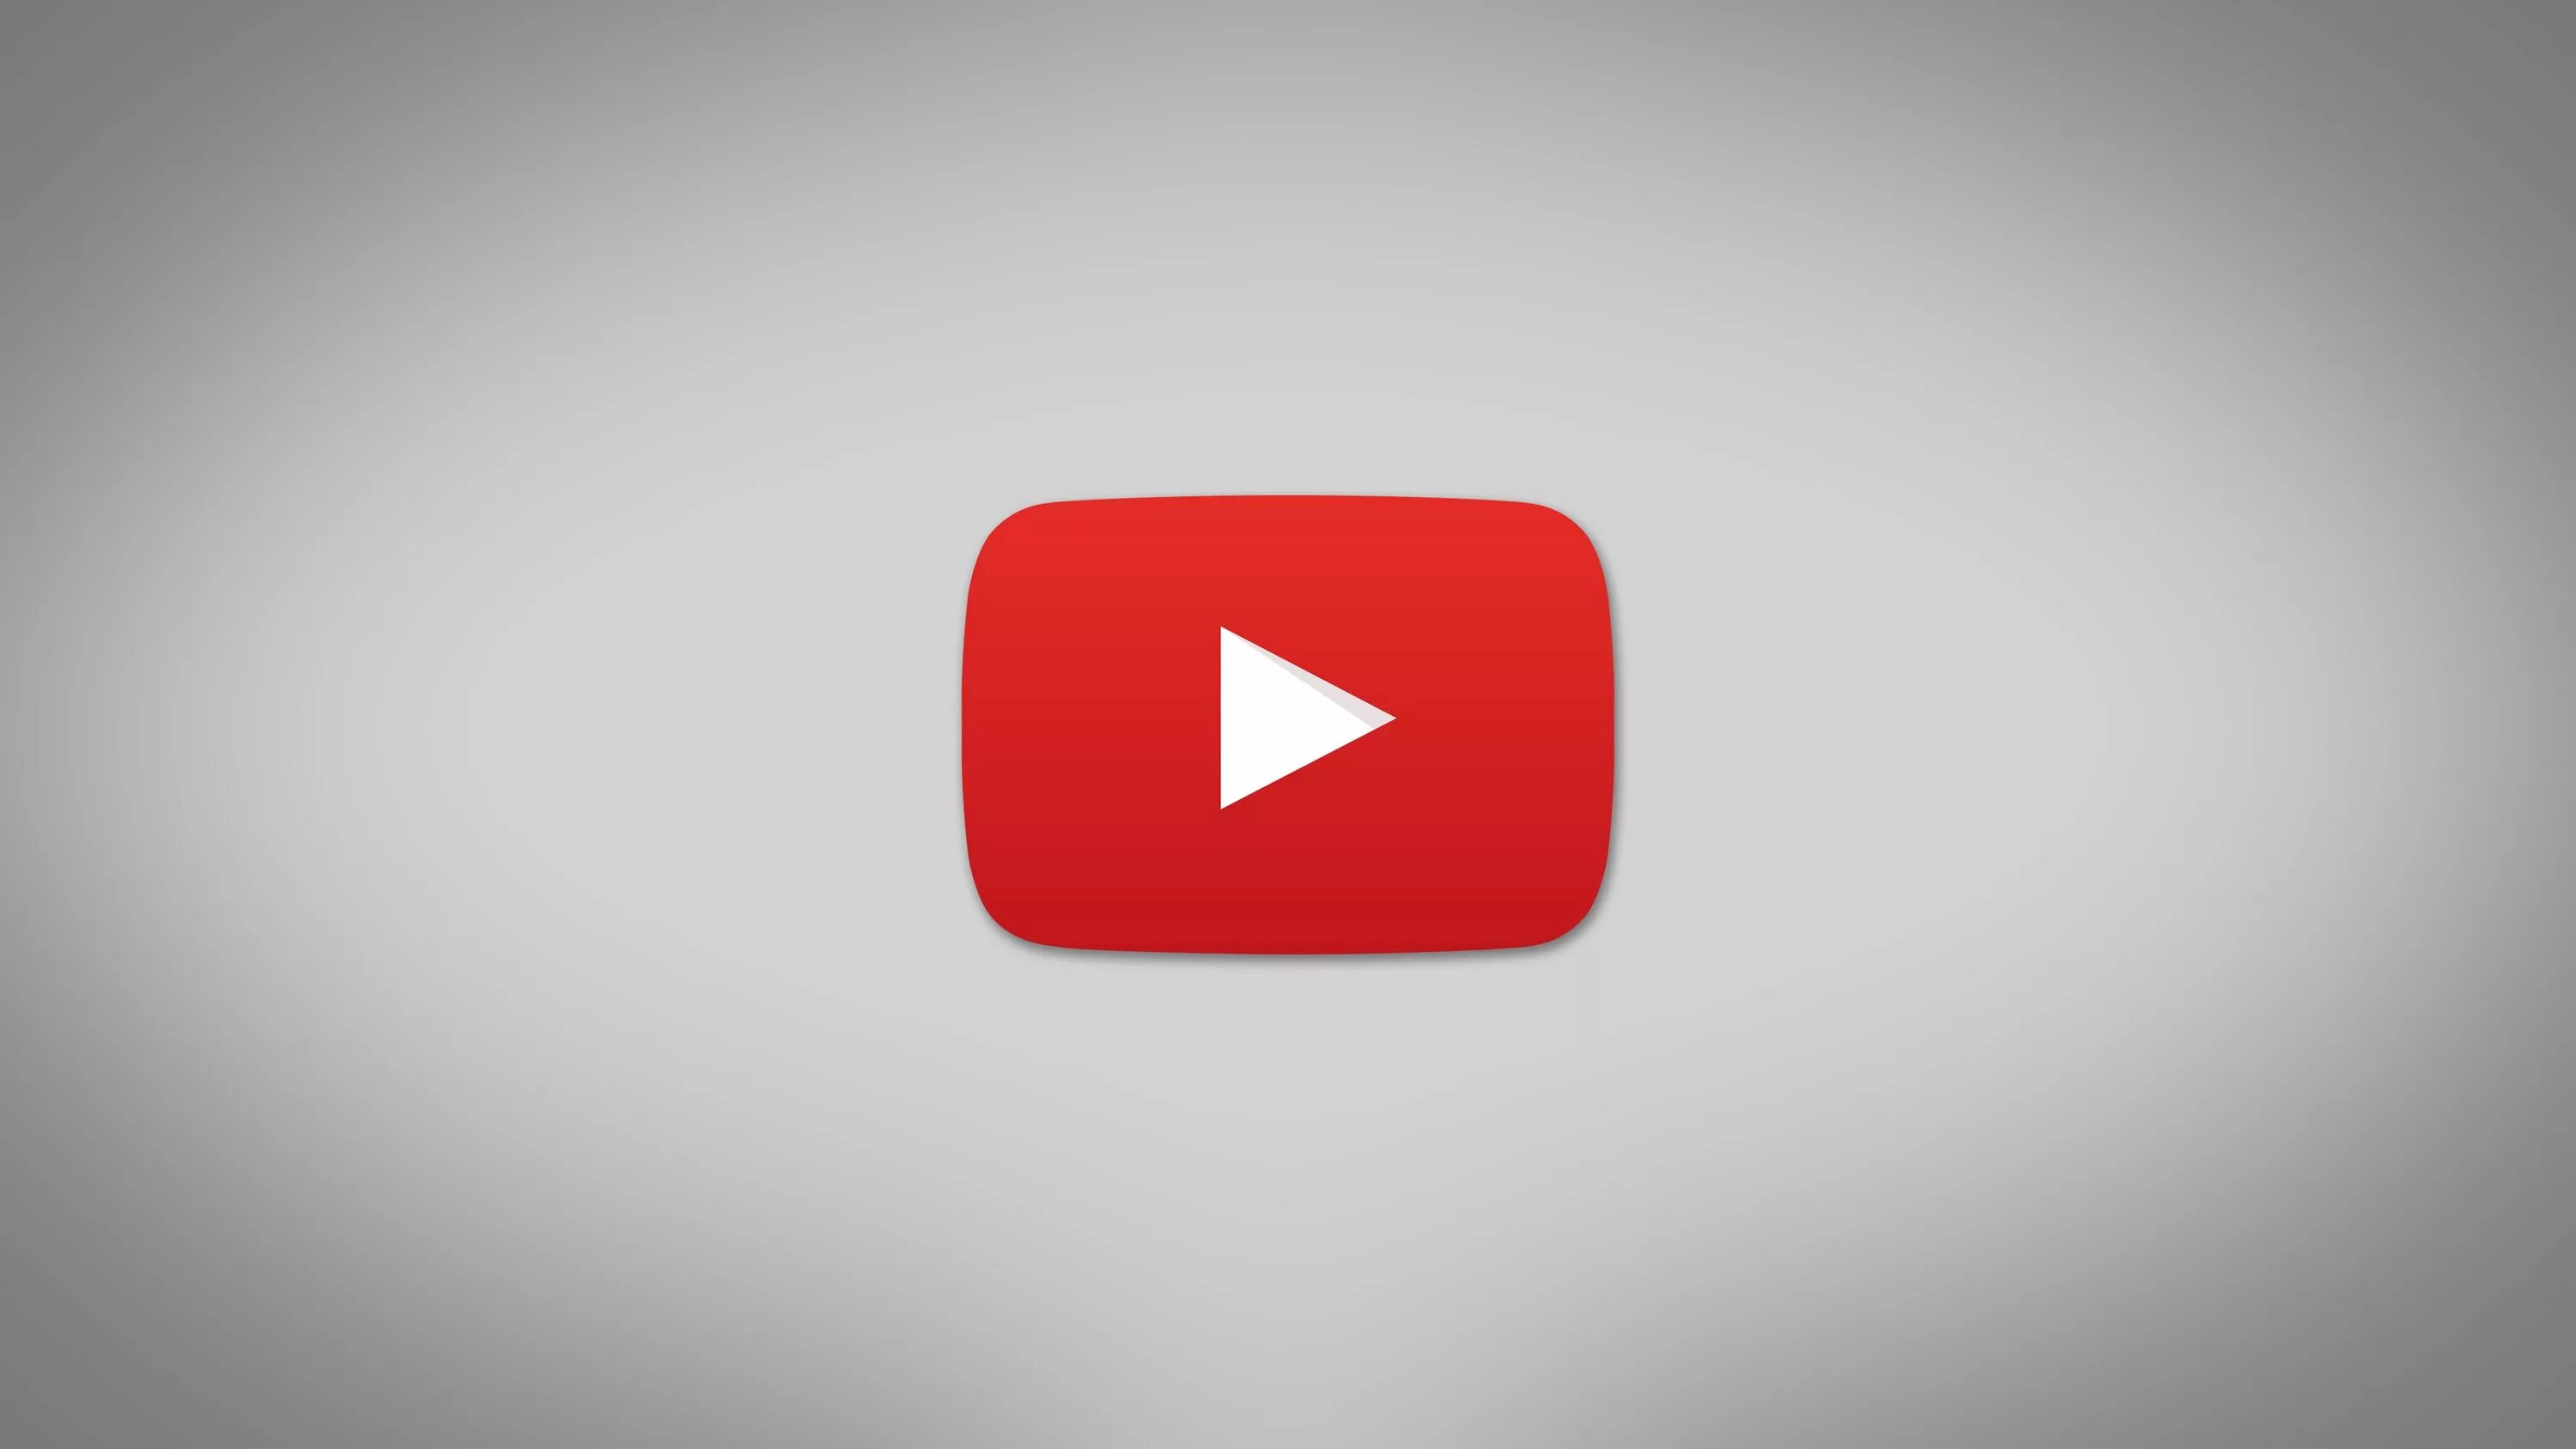 Ne официальная страница 1. Логотип youtube. Знак ютуба. Логотип ютуб маленький. Значок ютуба без фона.